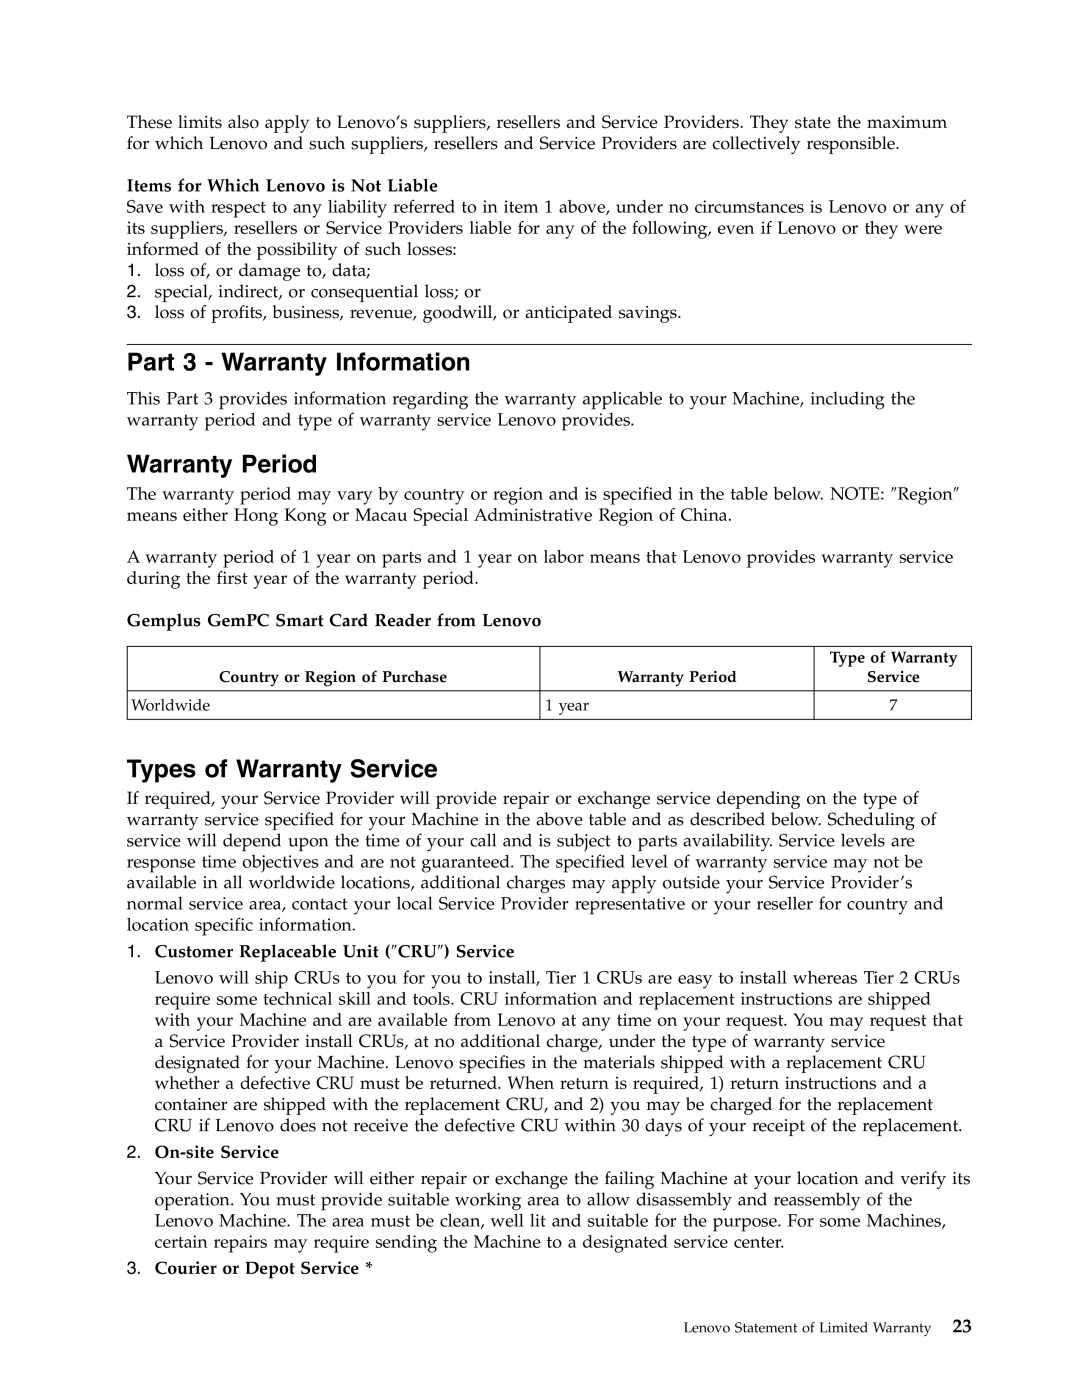 Lenovo 41N3005 manual Part 3 - Warranty Information, Warranty Period, Types of Warranty Service, On-siteService 